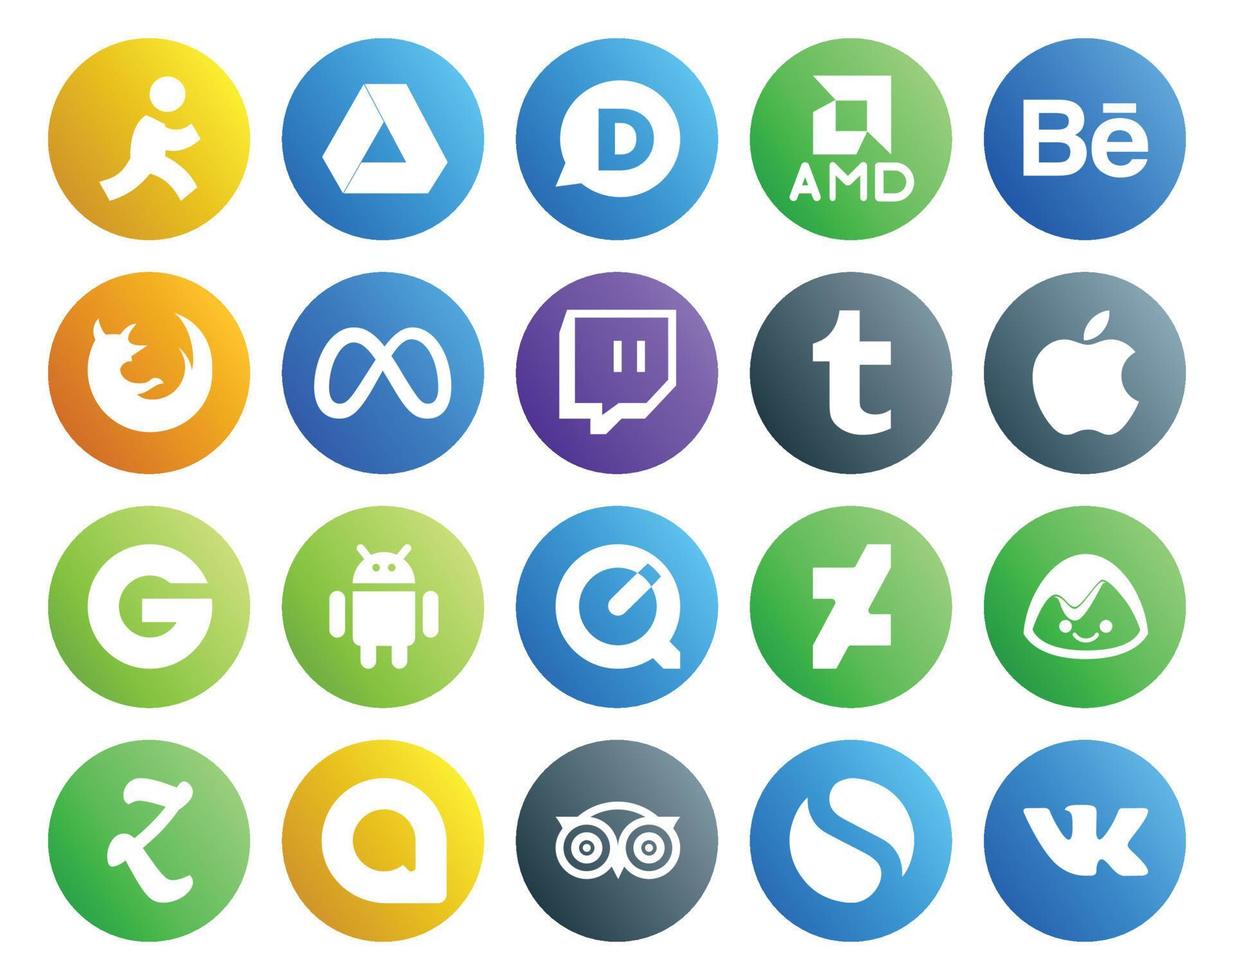 Paquete de 20 íconos de redes sociales que incluye zootool deviantart facebook quicktime groupon vector